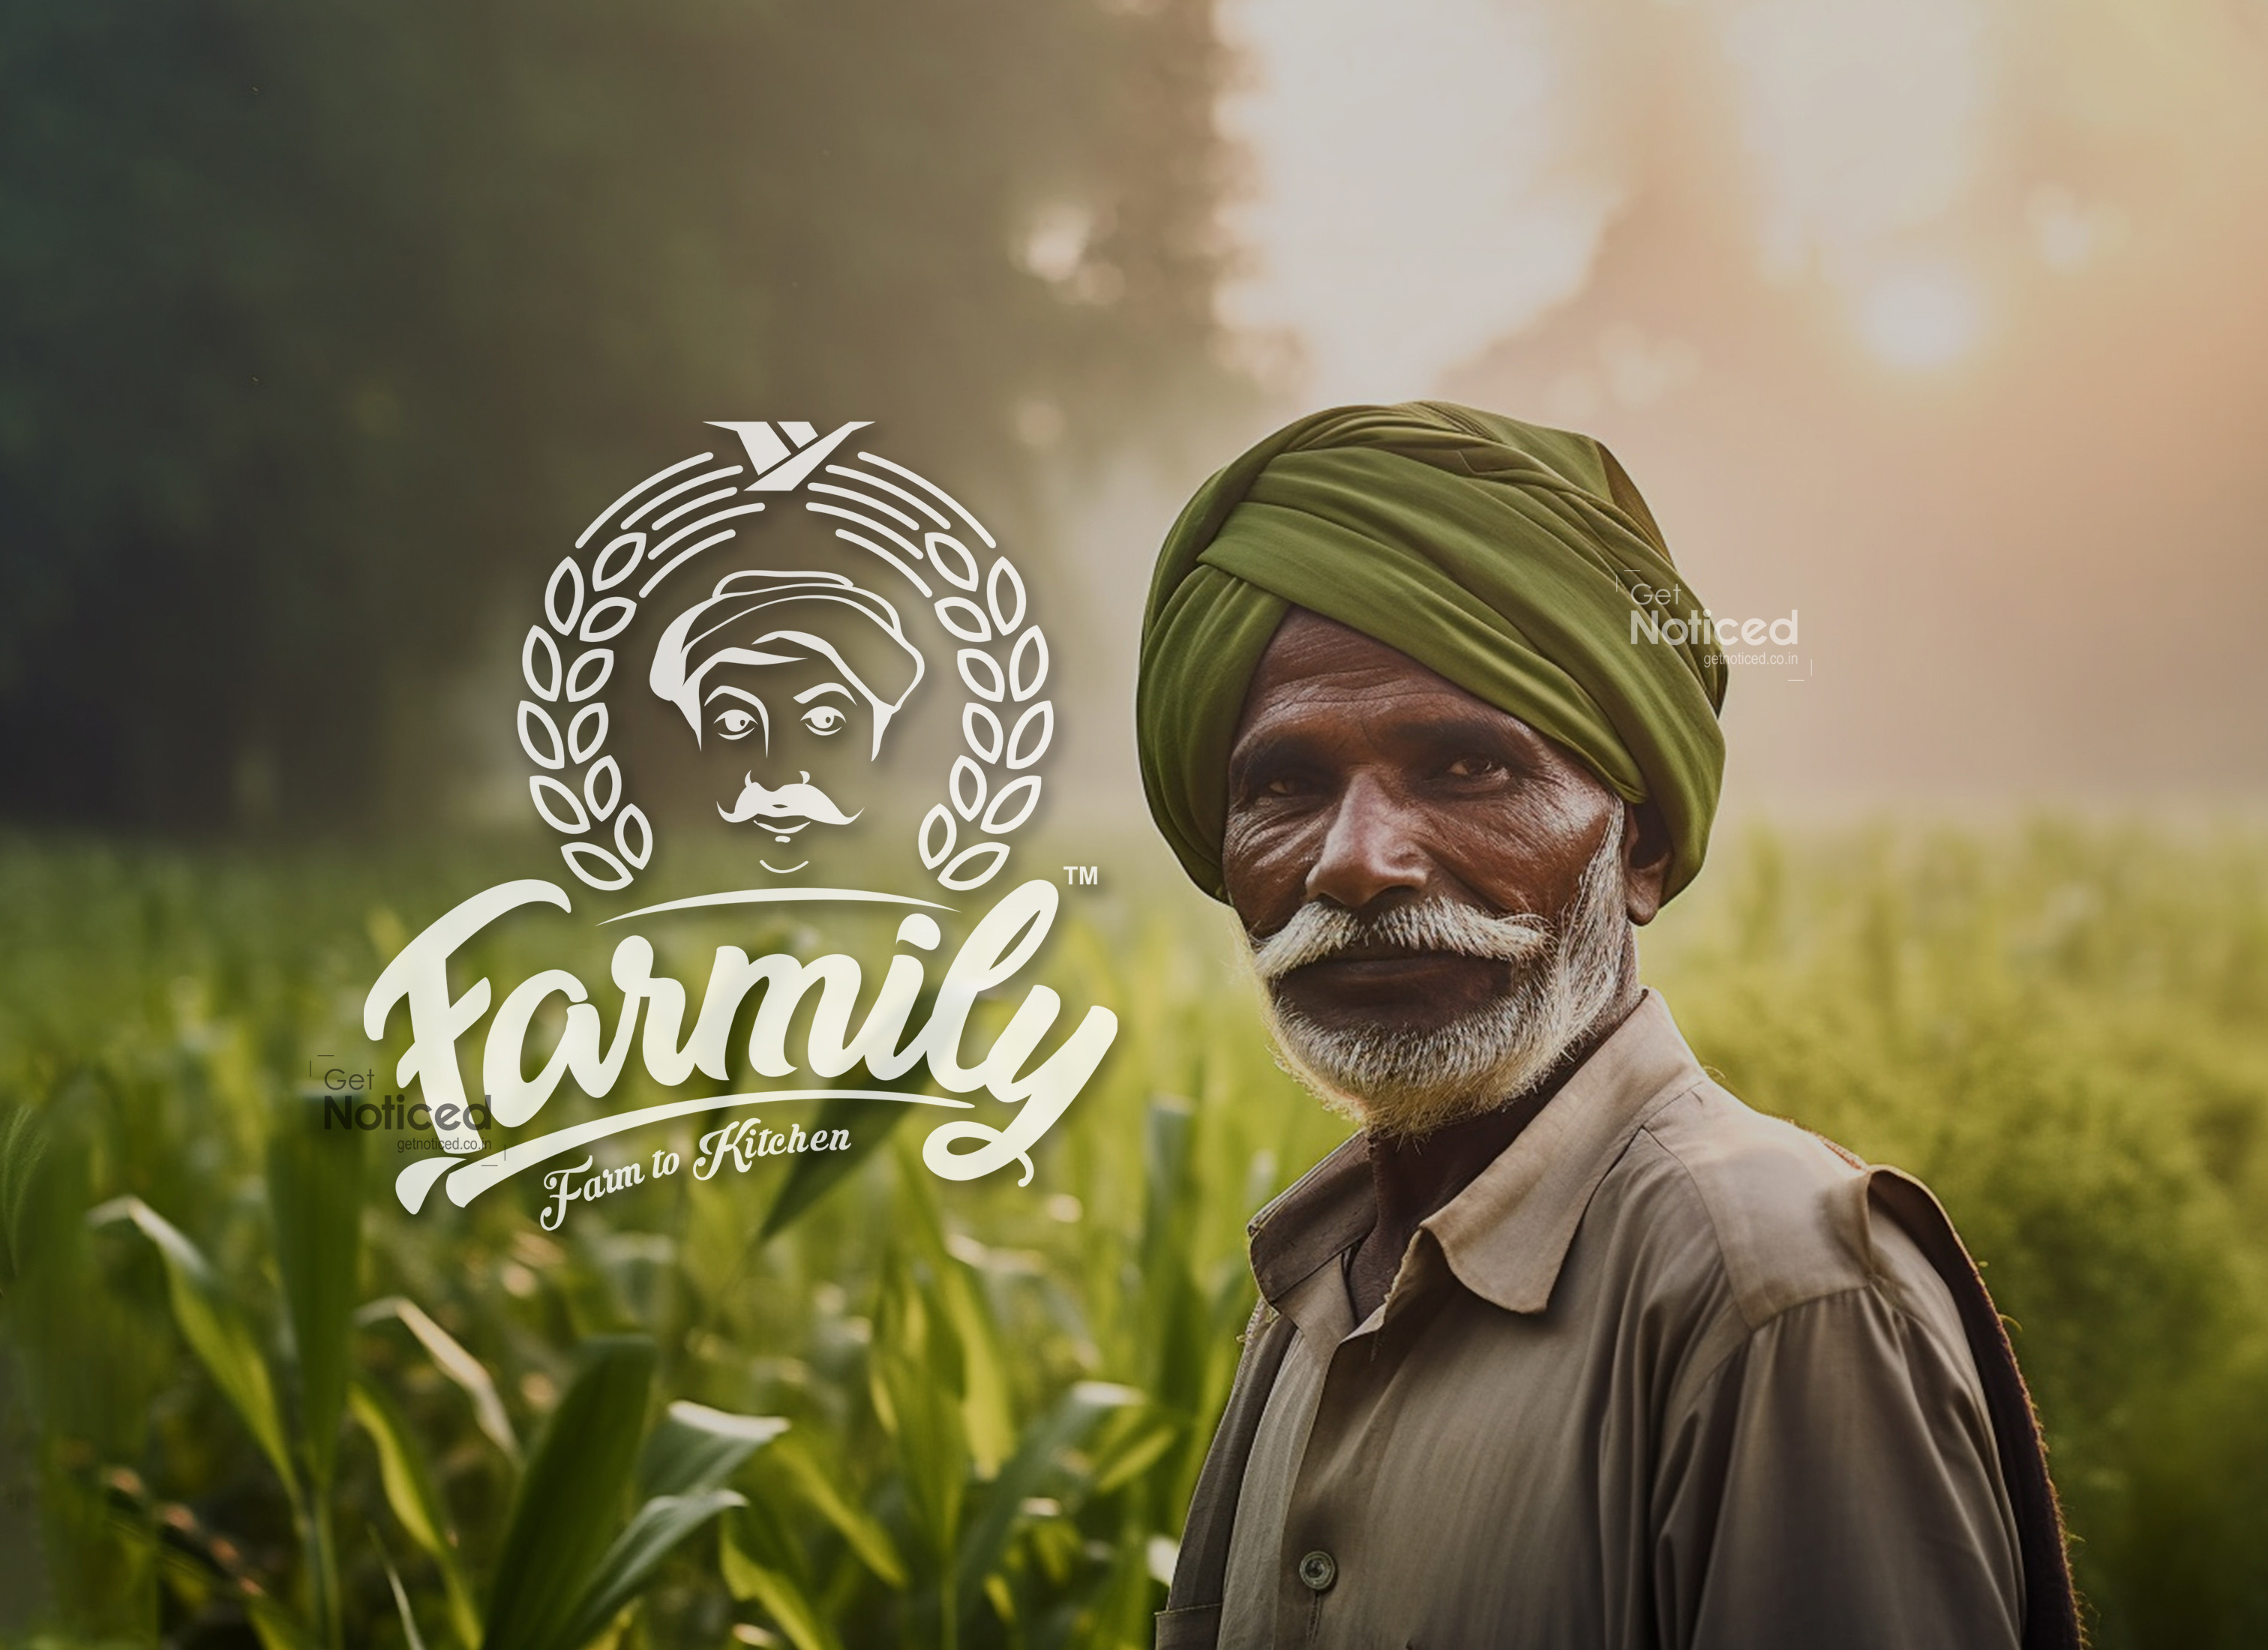 Farmily Logo Design